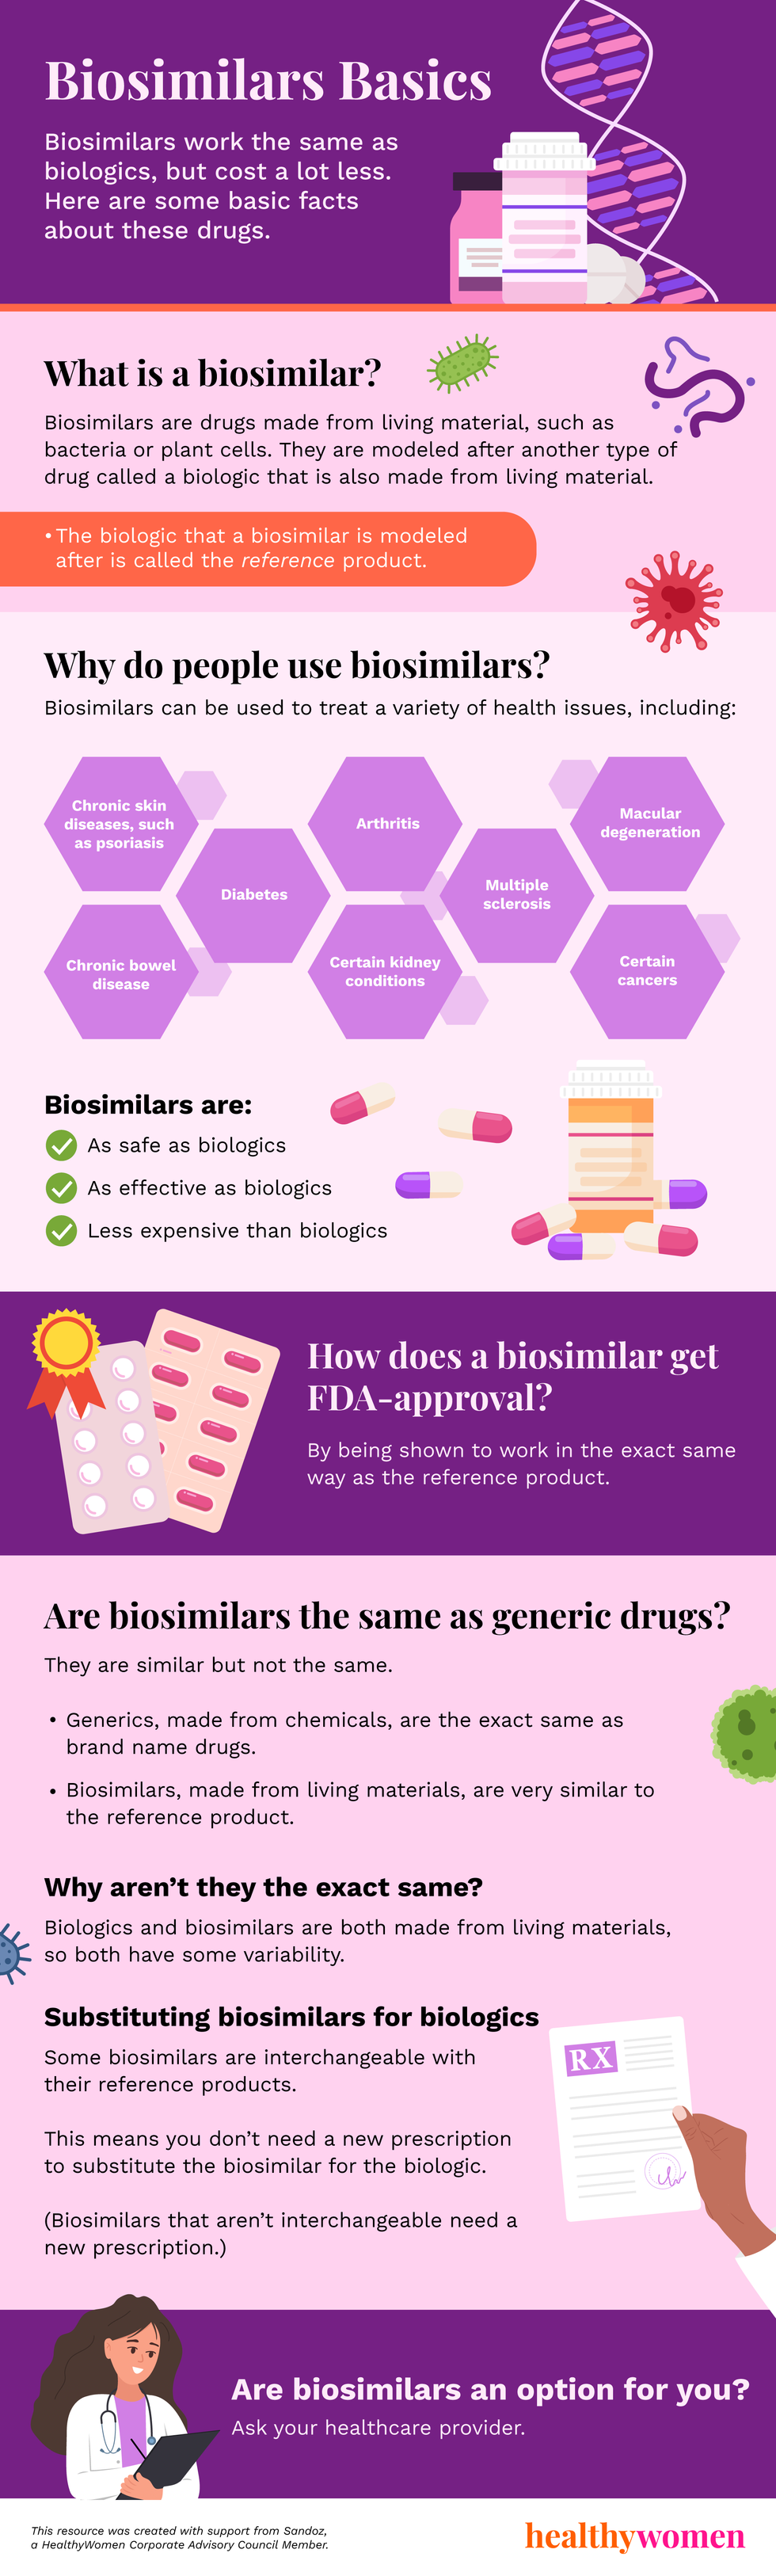 Biosimilars Basics Infographic. Click image to view PDF